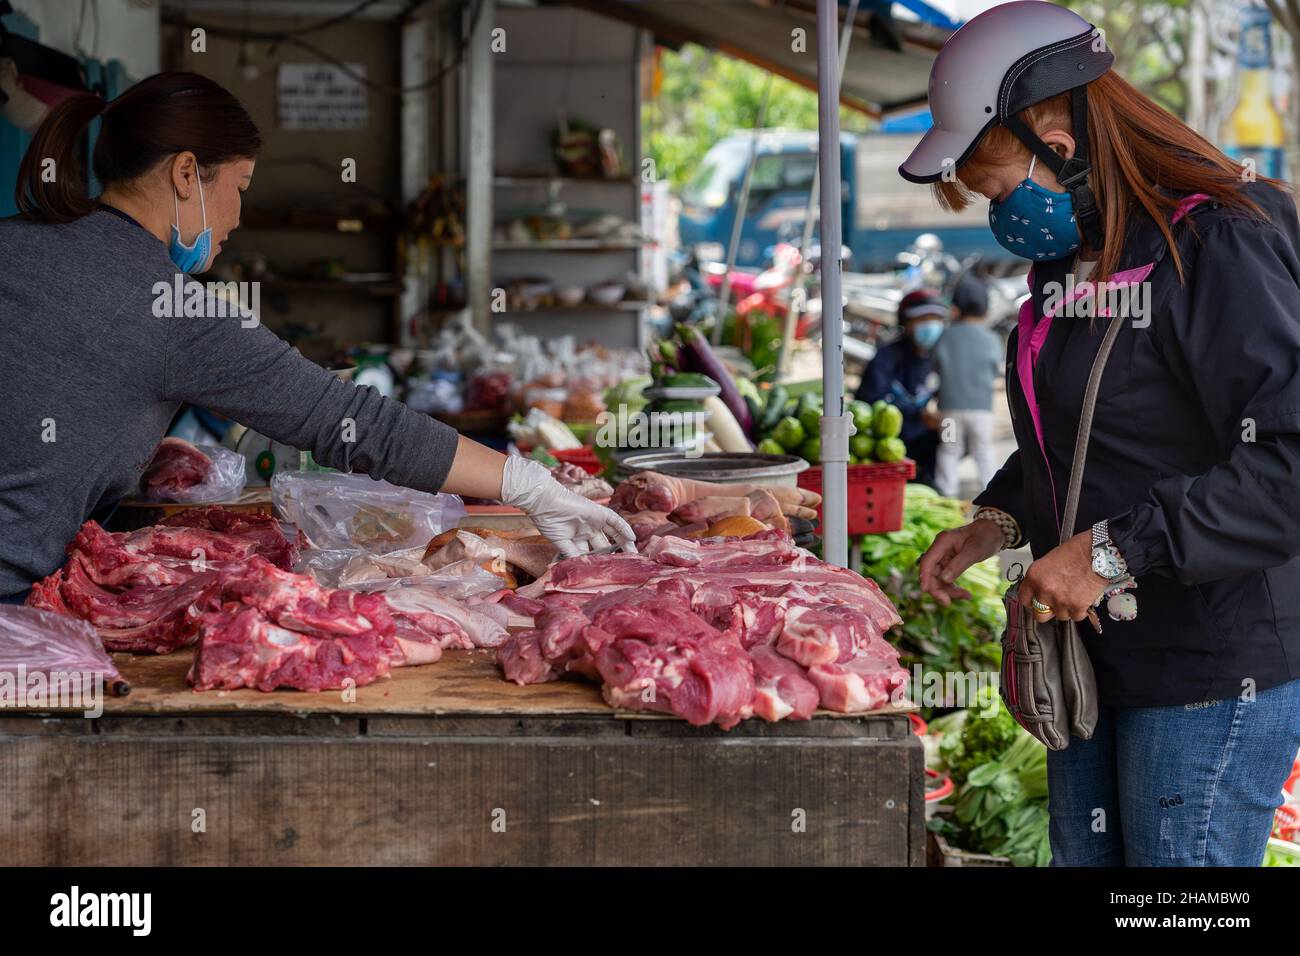 Meat stall in the street market. Woman buys pork. Da Lat, Vietnam: 2021-05-08 Stock Photo